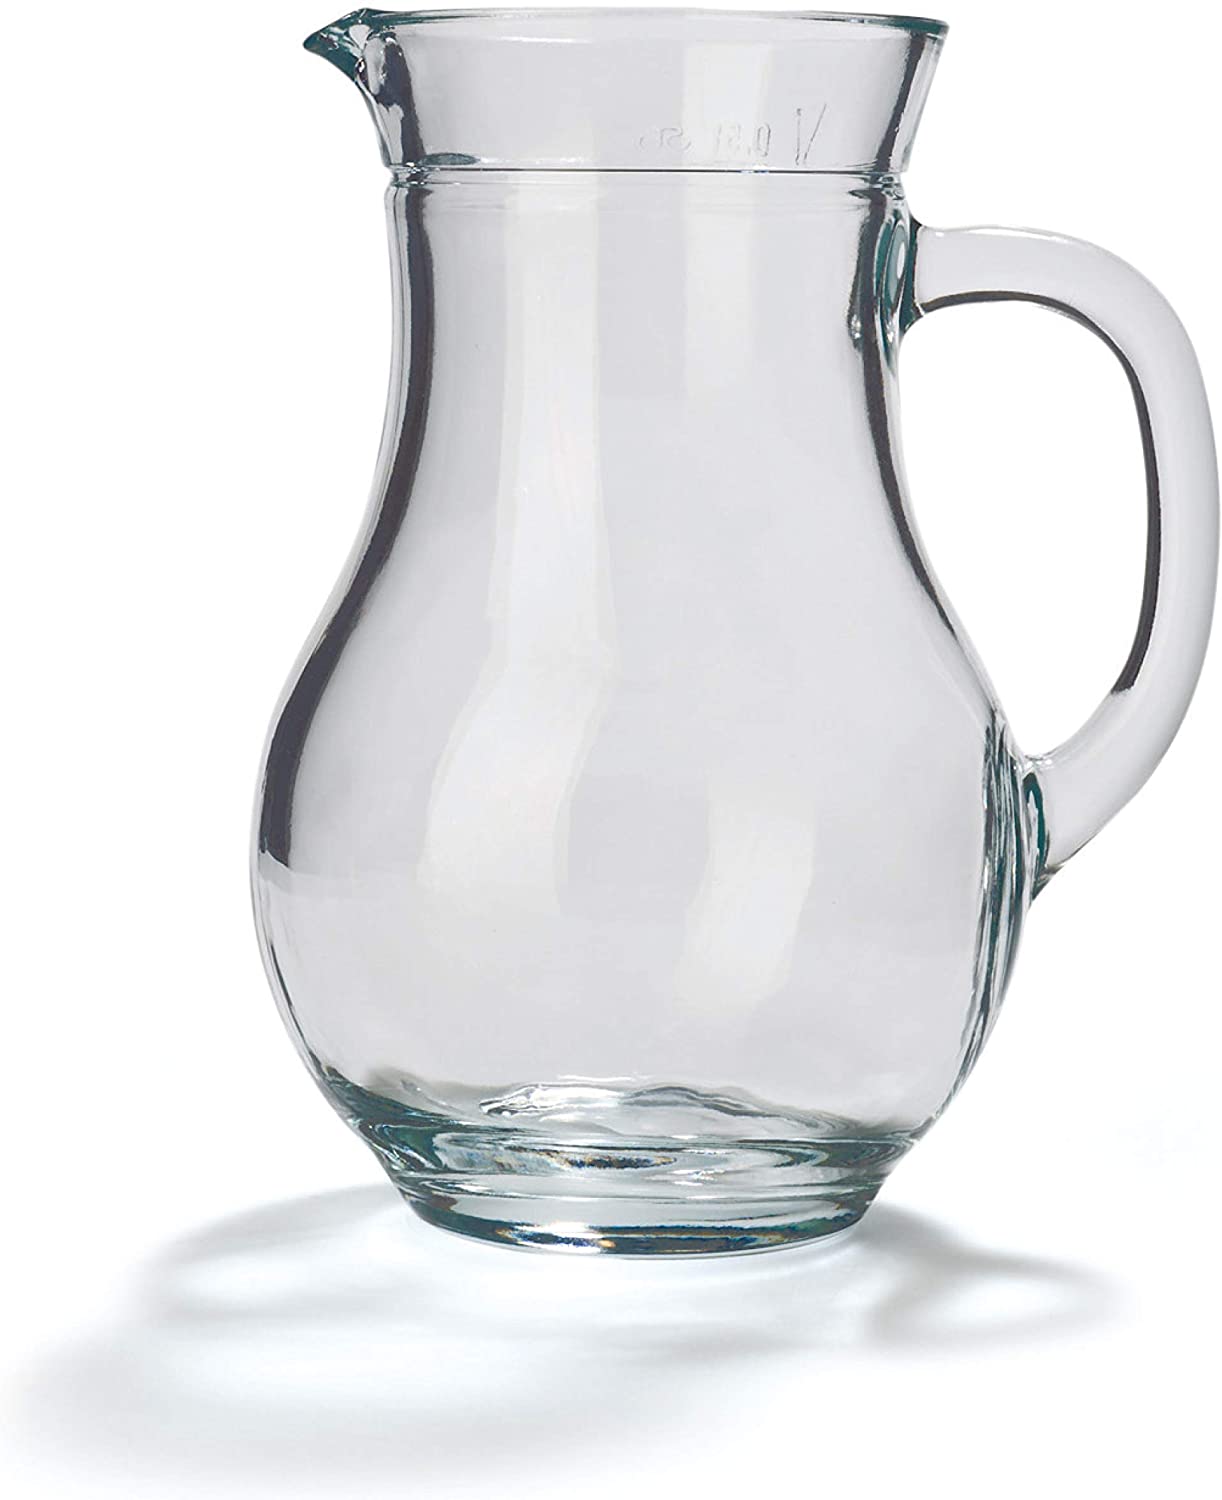 Stölzle Lausitz Stölzle top glass jug carnuntum 0.5 litres, water jug, wine jug, set of 6, dishwasher safe, high quality